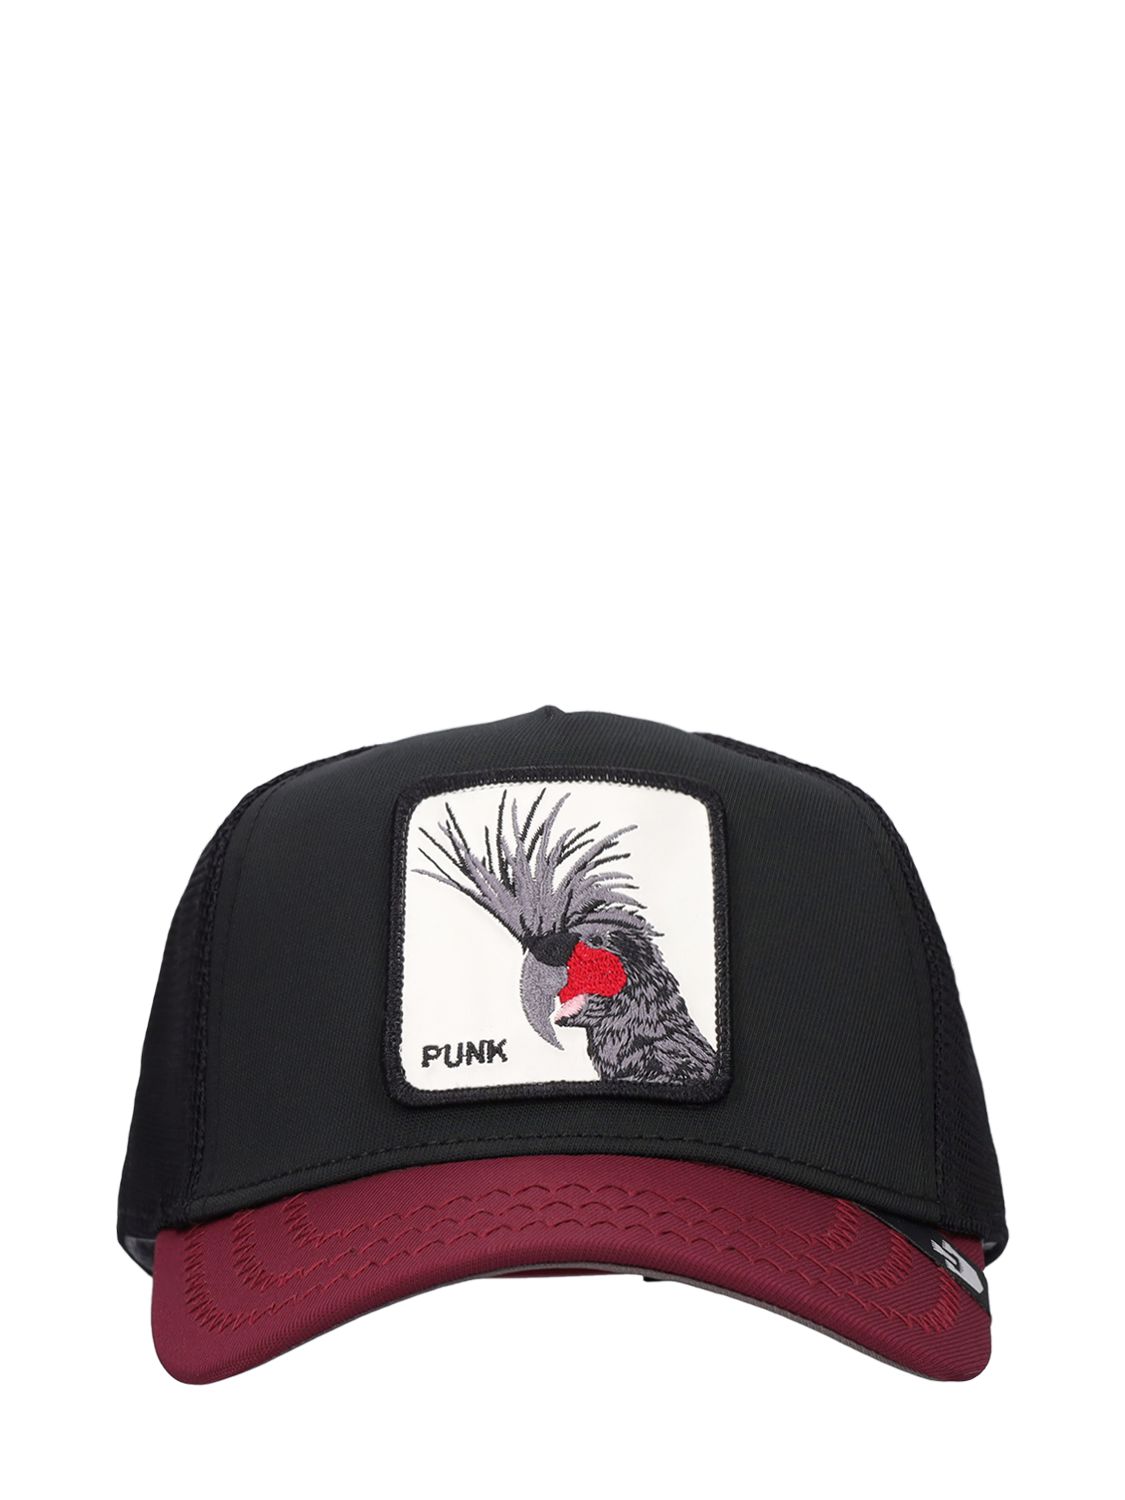 The Punk Trucker Hat W/patch